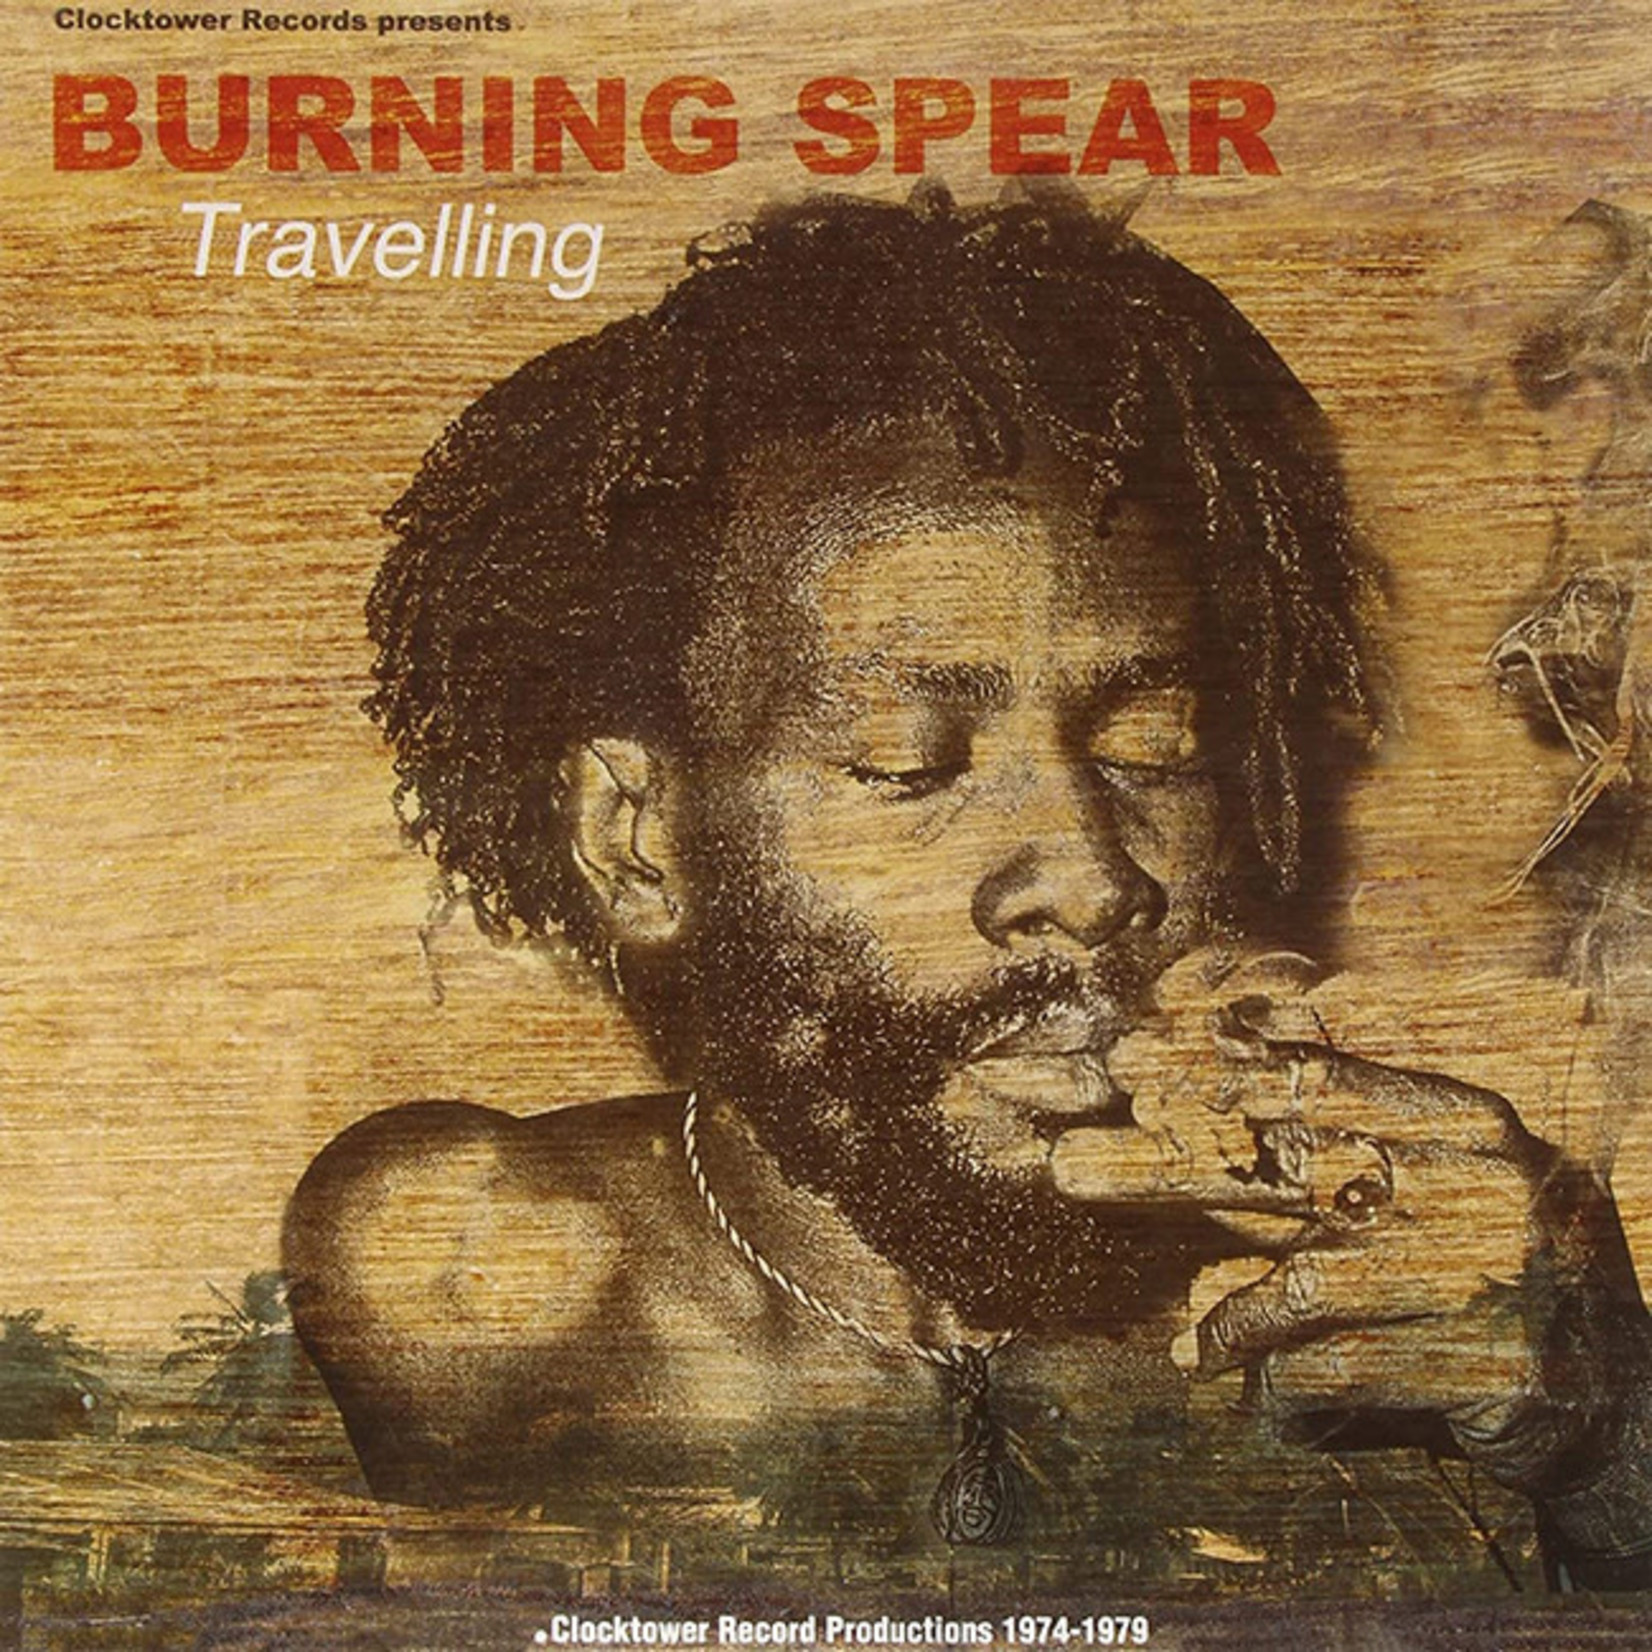 [New] Burning Spear - Travelling